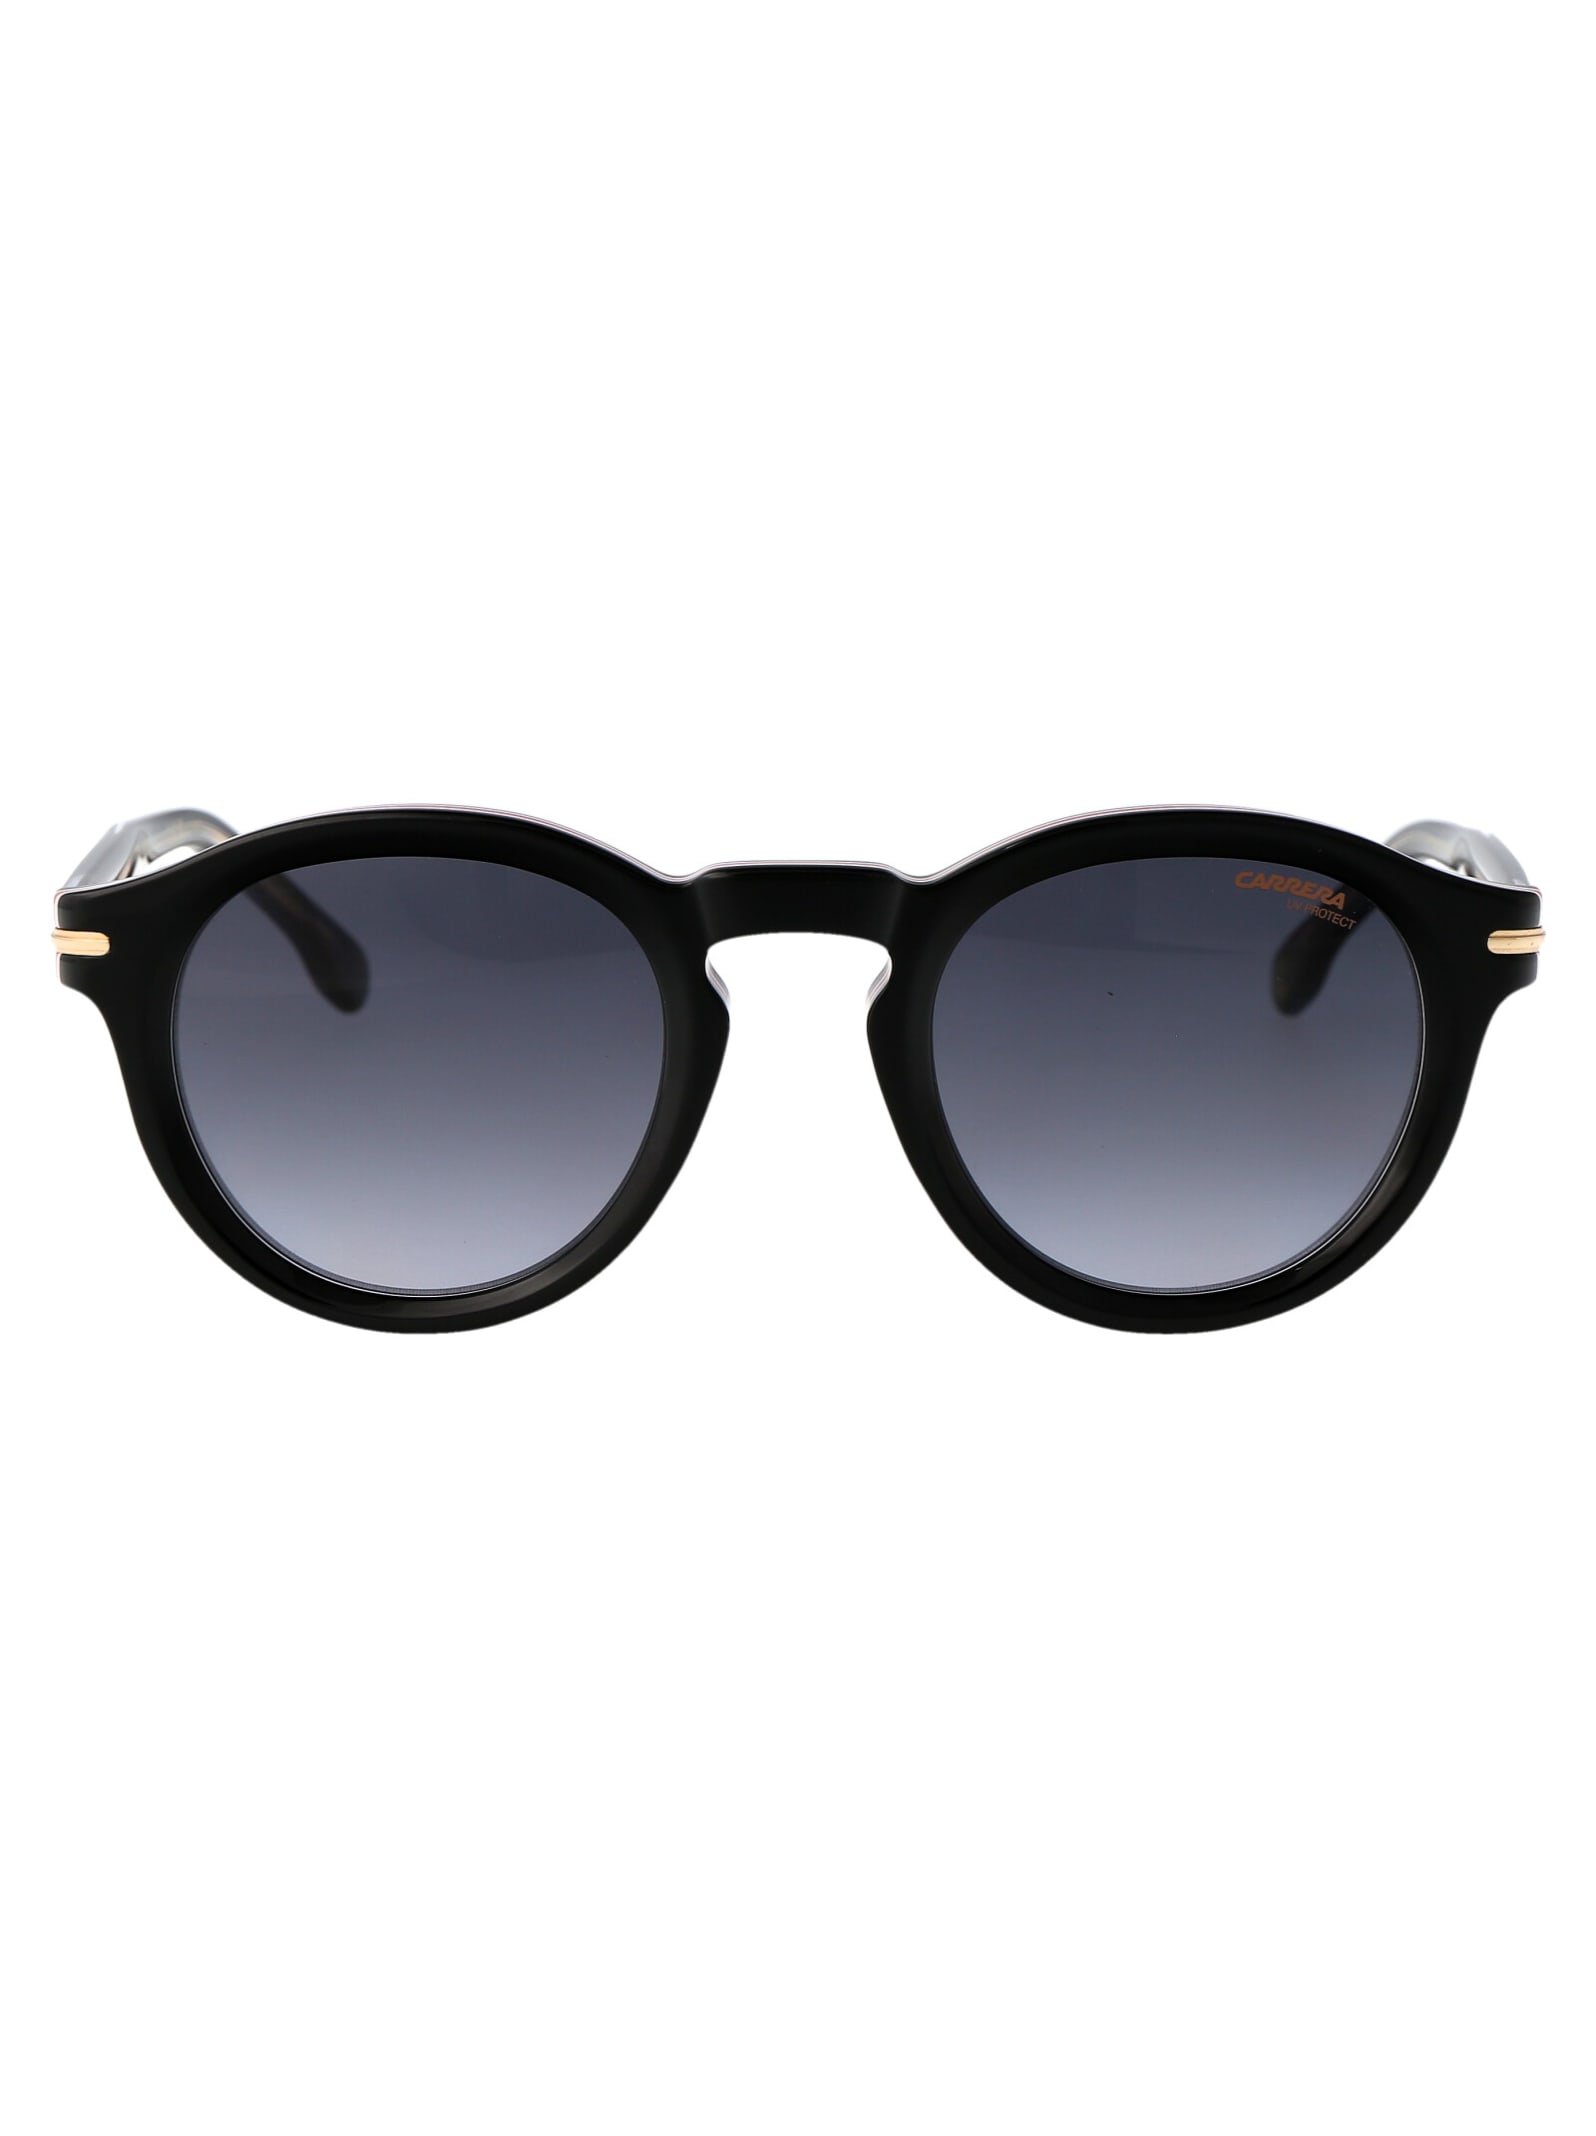 Carrera 306/s Sunglasses